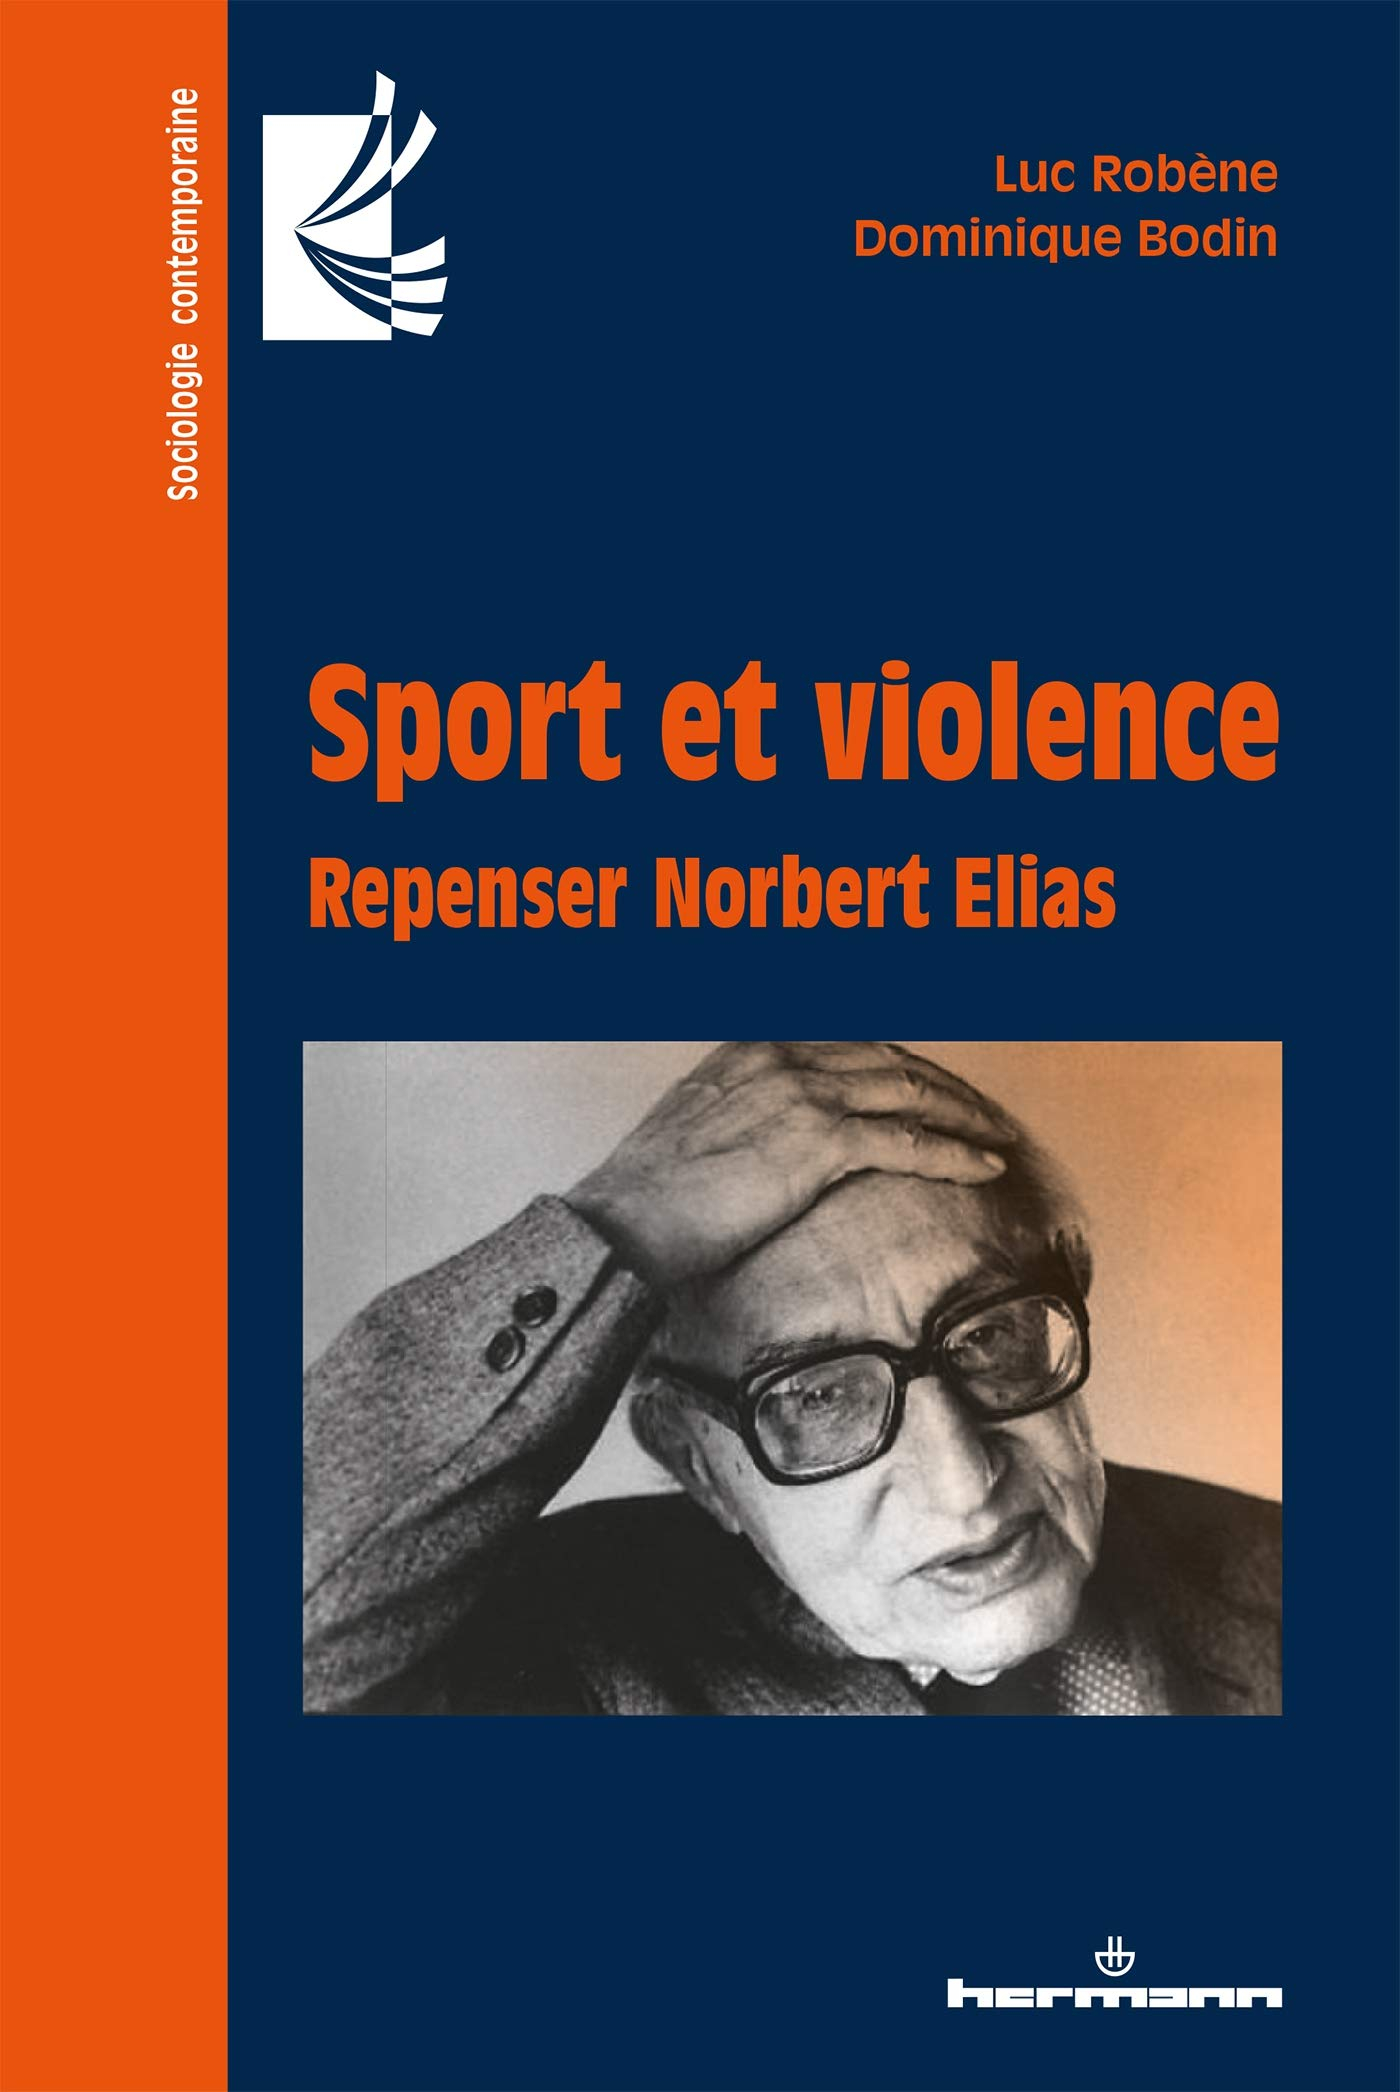 Sport et violence: Repenser Norbert Elias